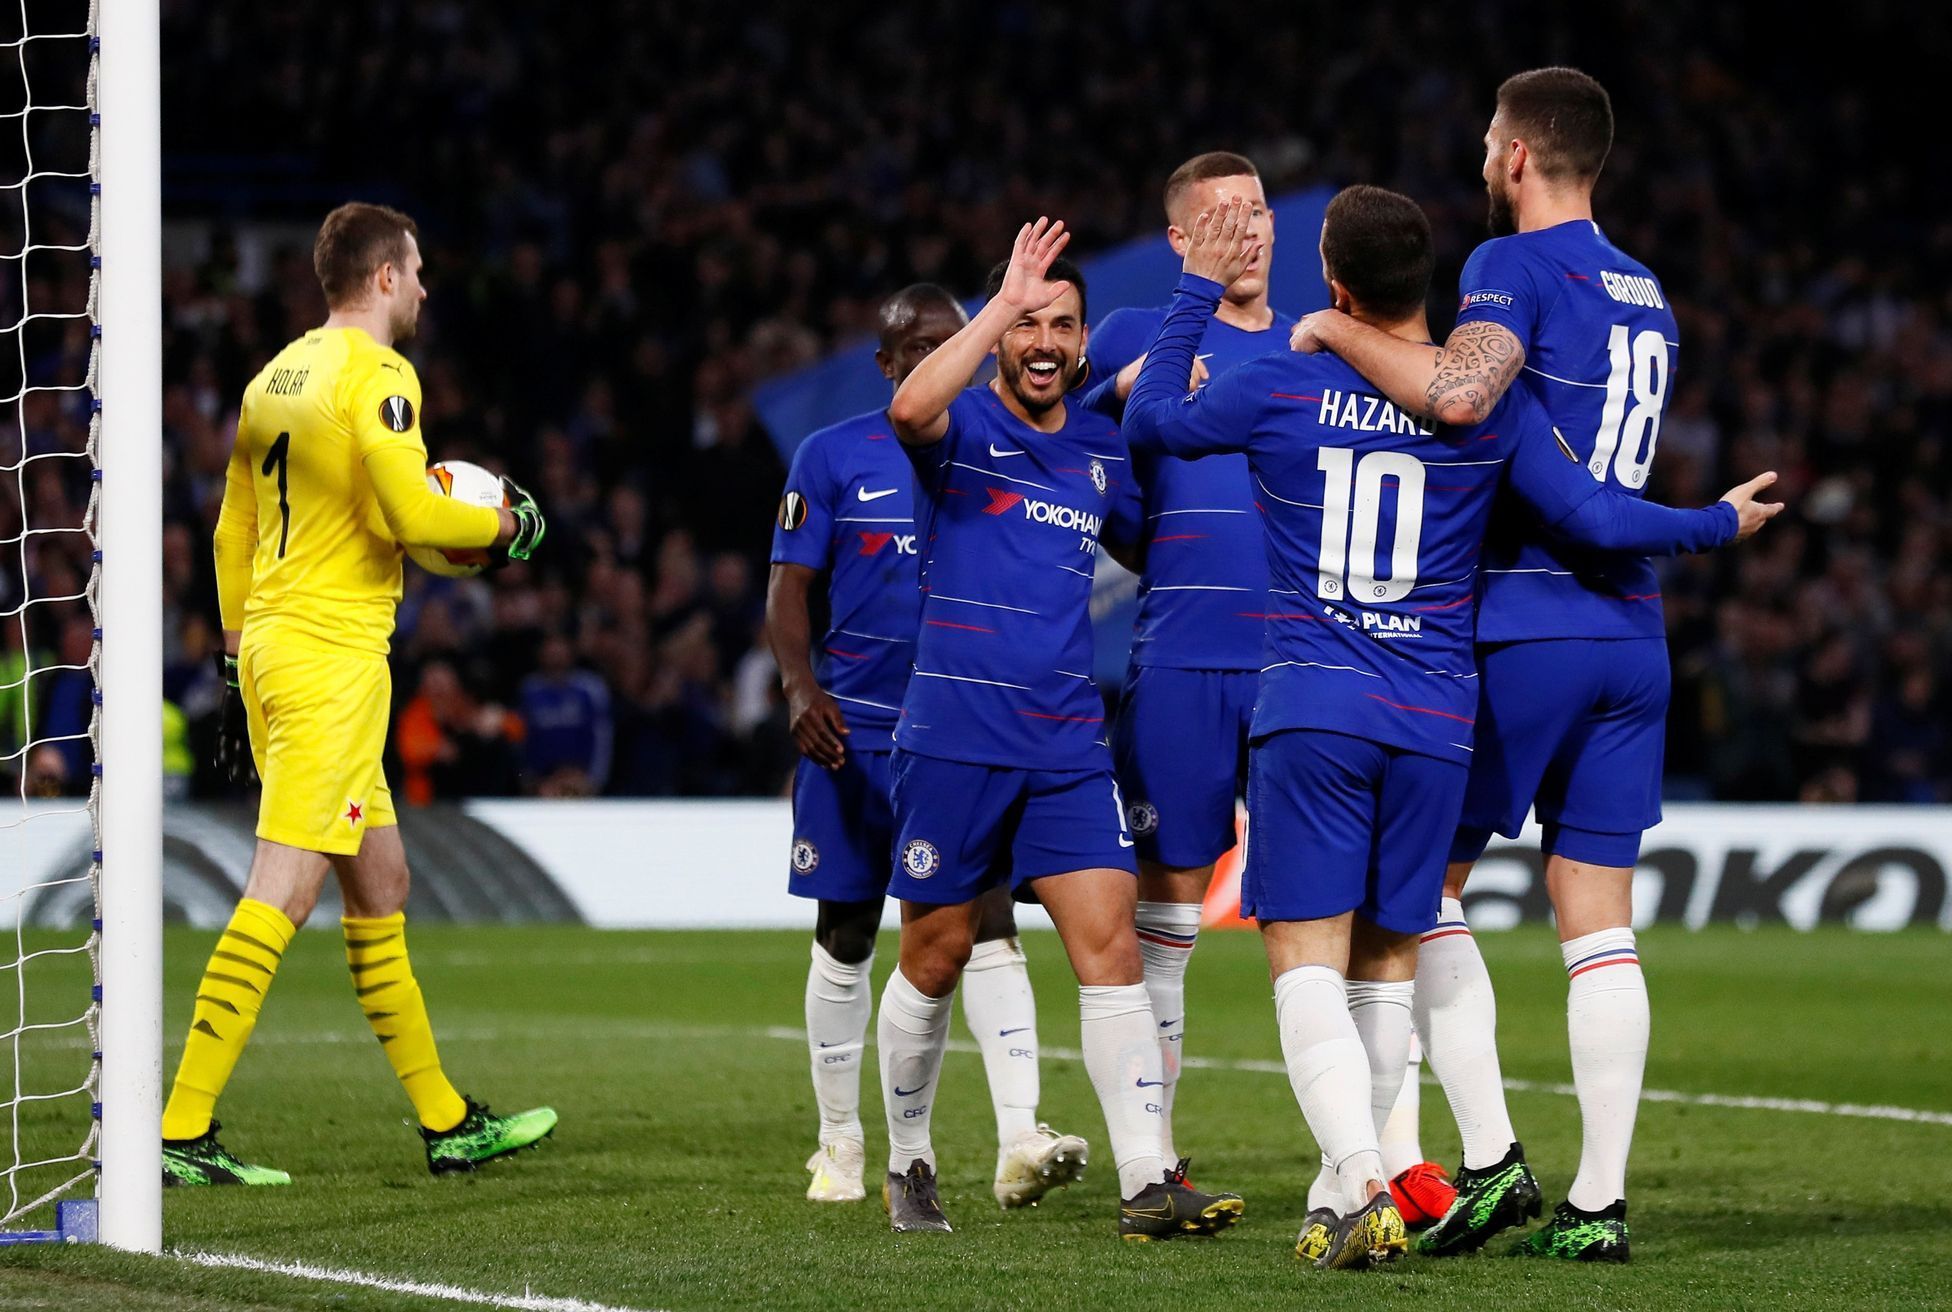 fotbal, odveta čtvrtfinále Evropské ligy, Chelsea - Slavia, Chelsea slaví druhý gól